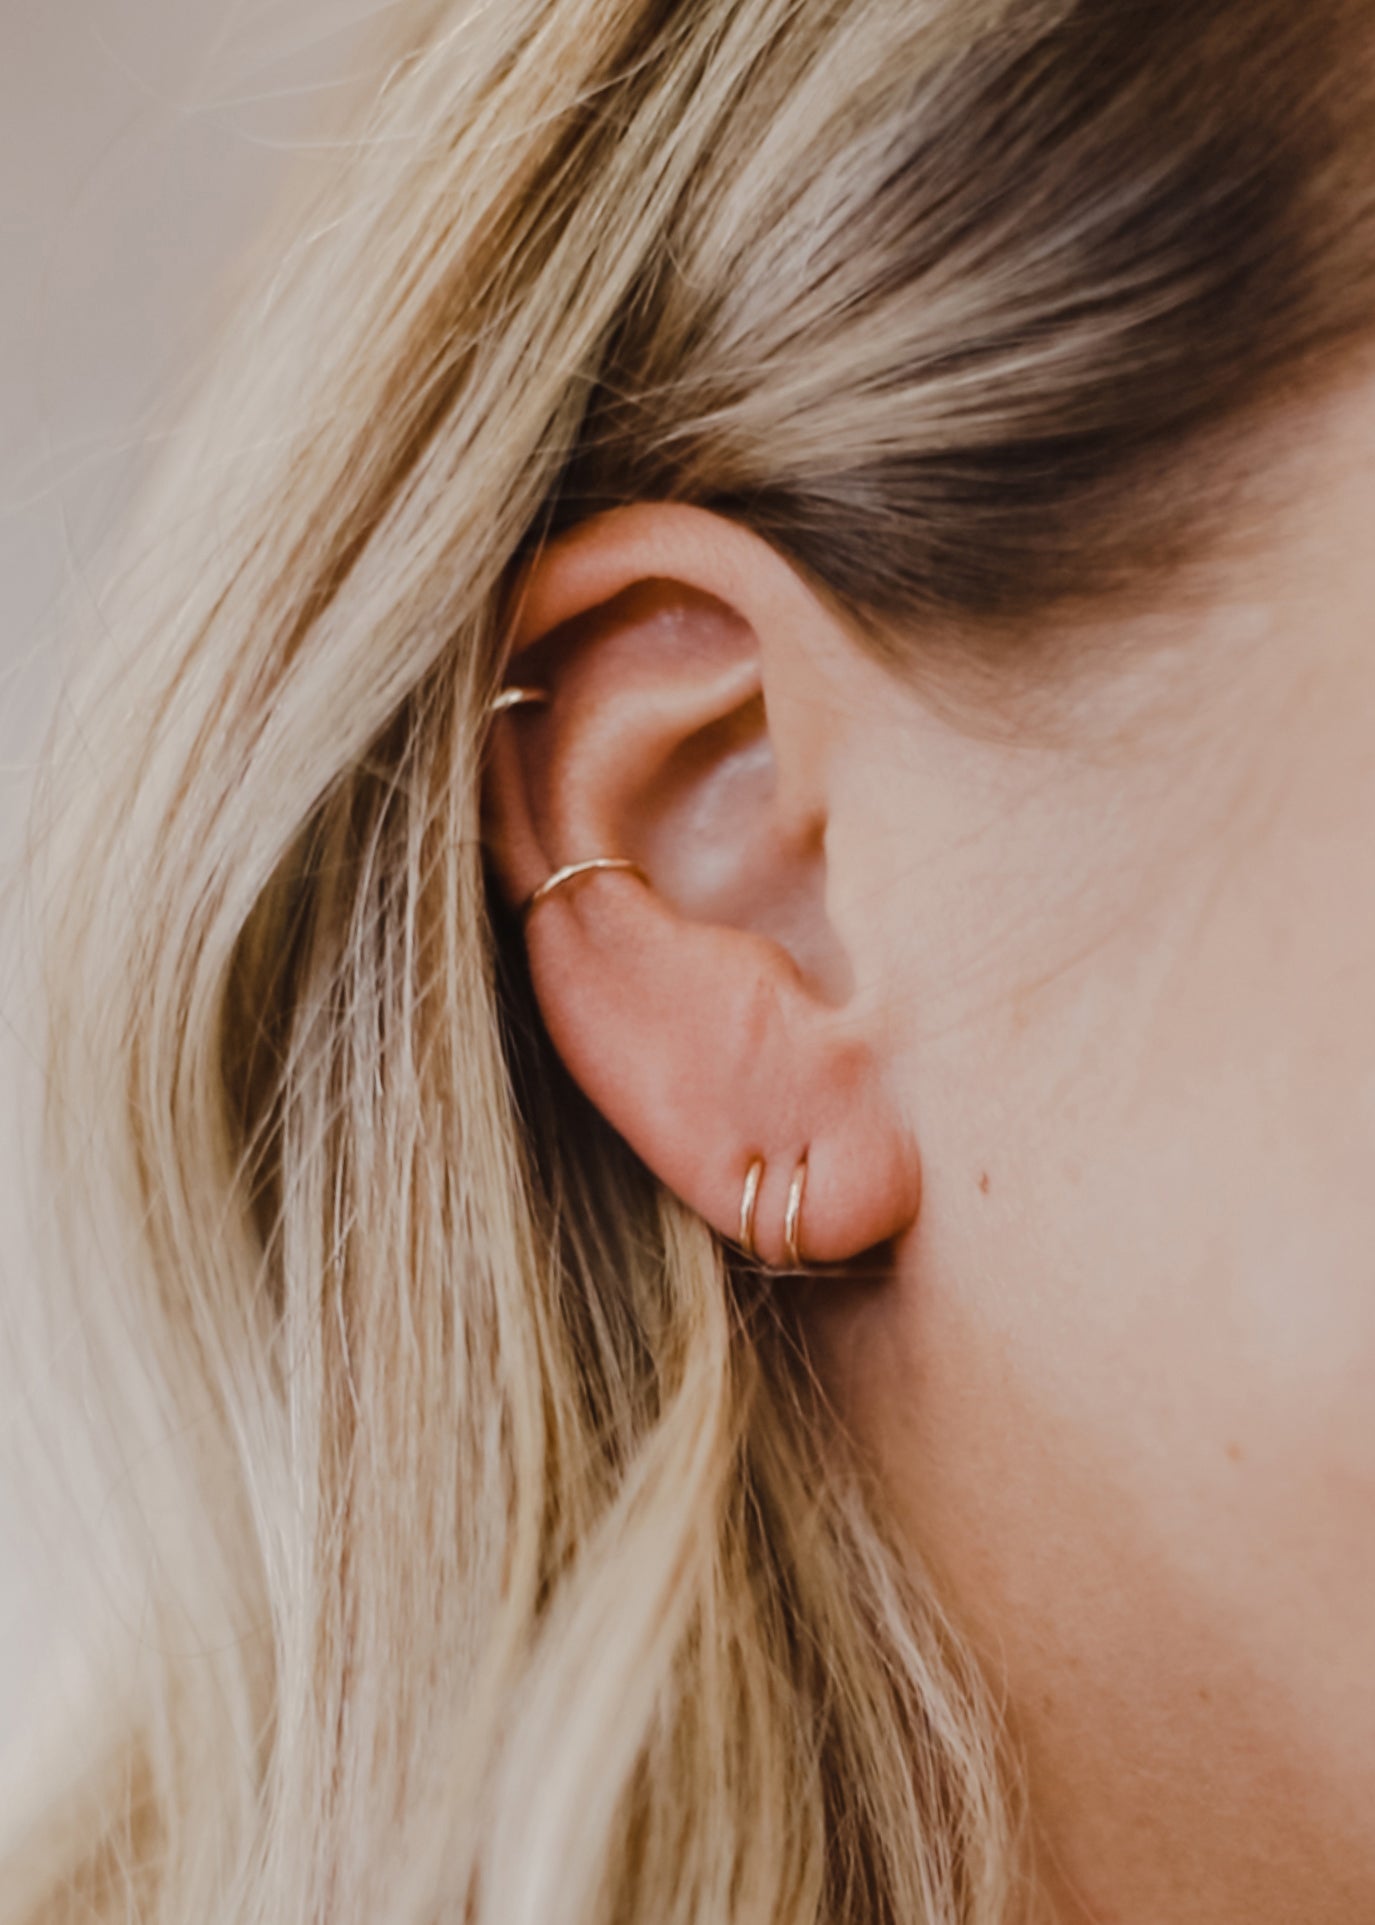 Details more than 214 earrings for women best